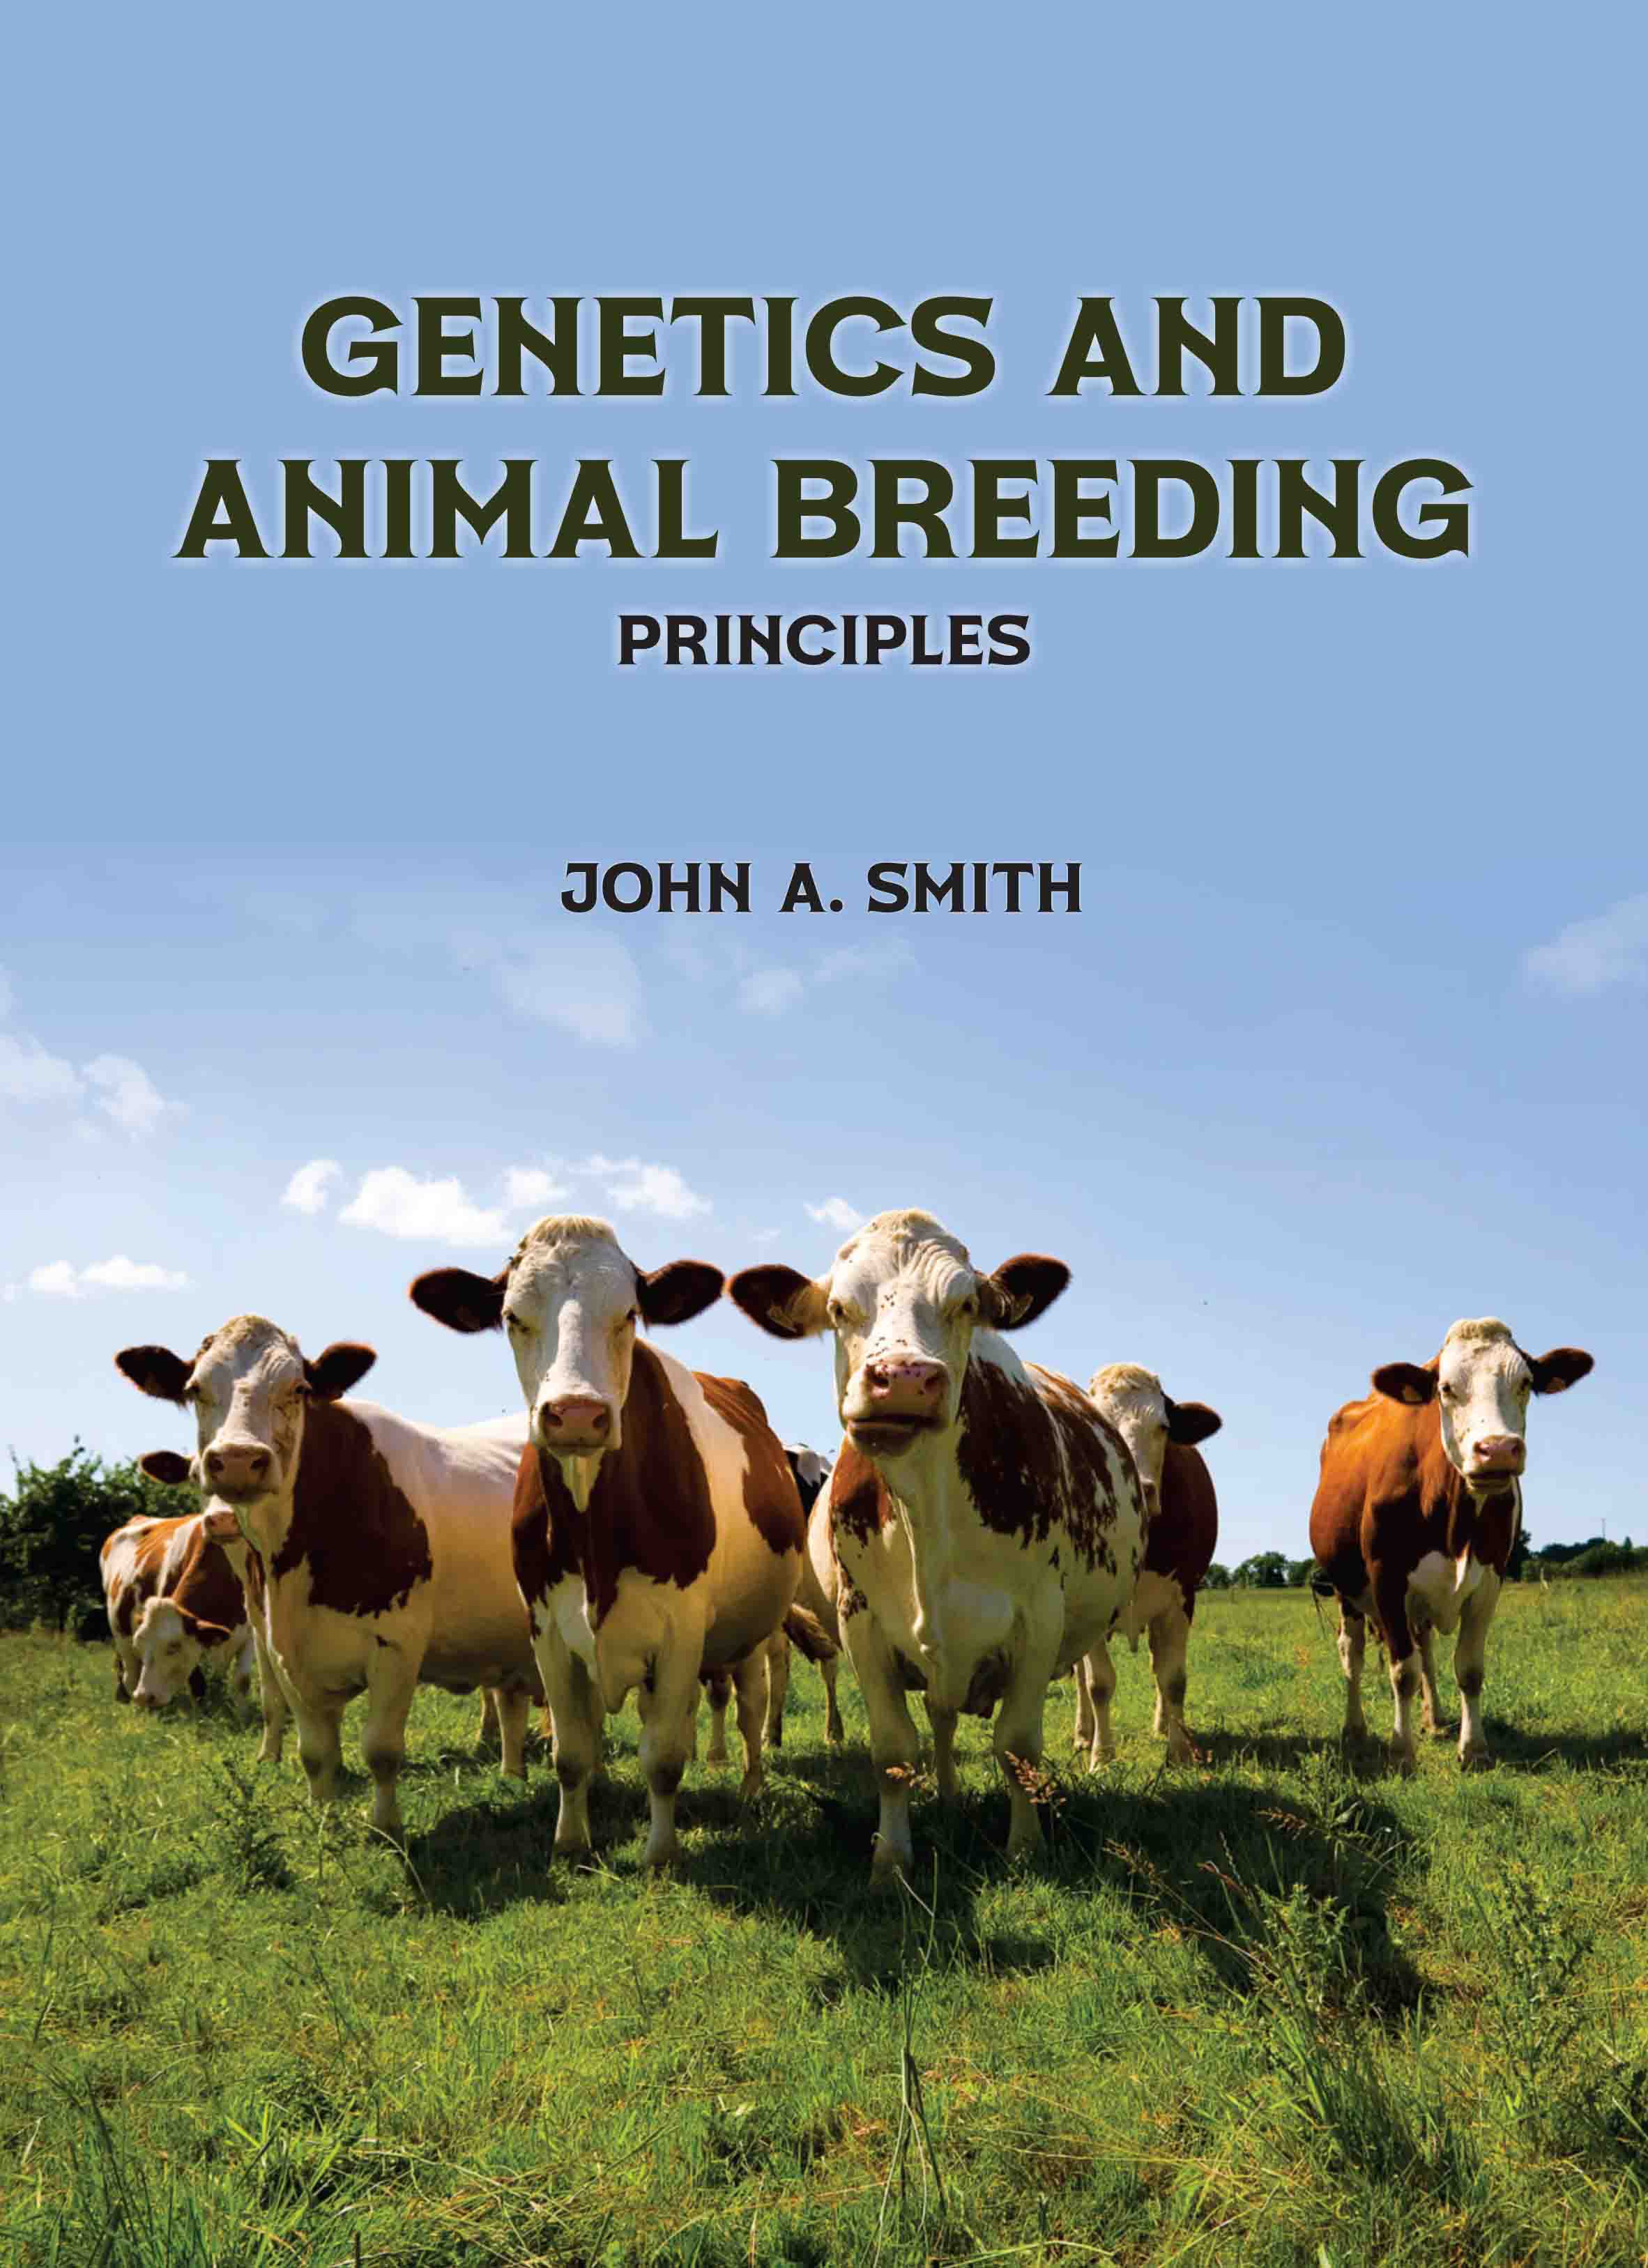 Genetics and Animal Breeding: Principles